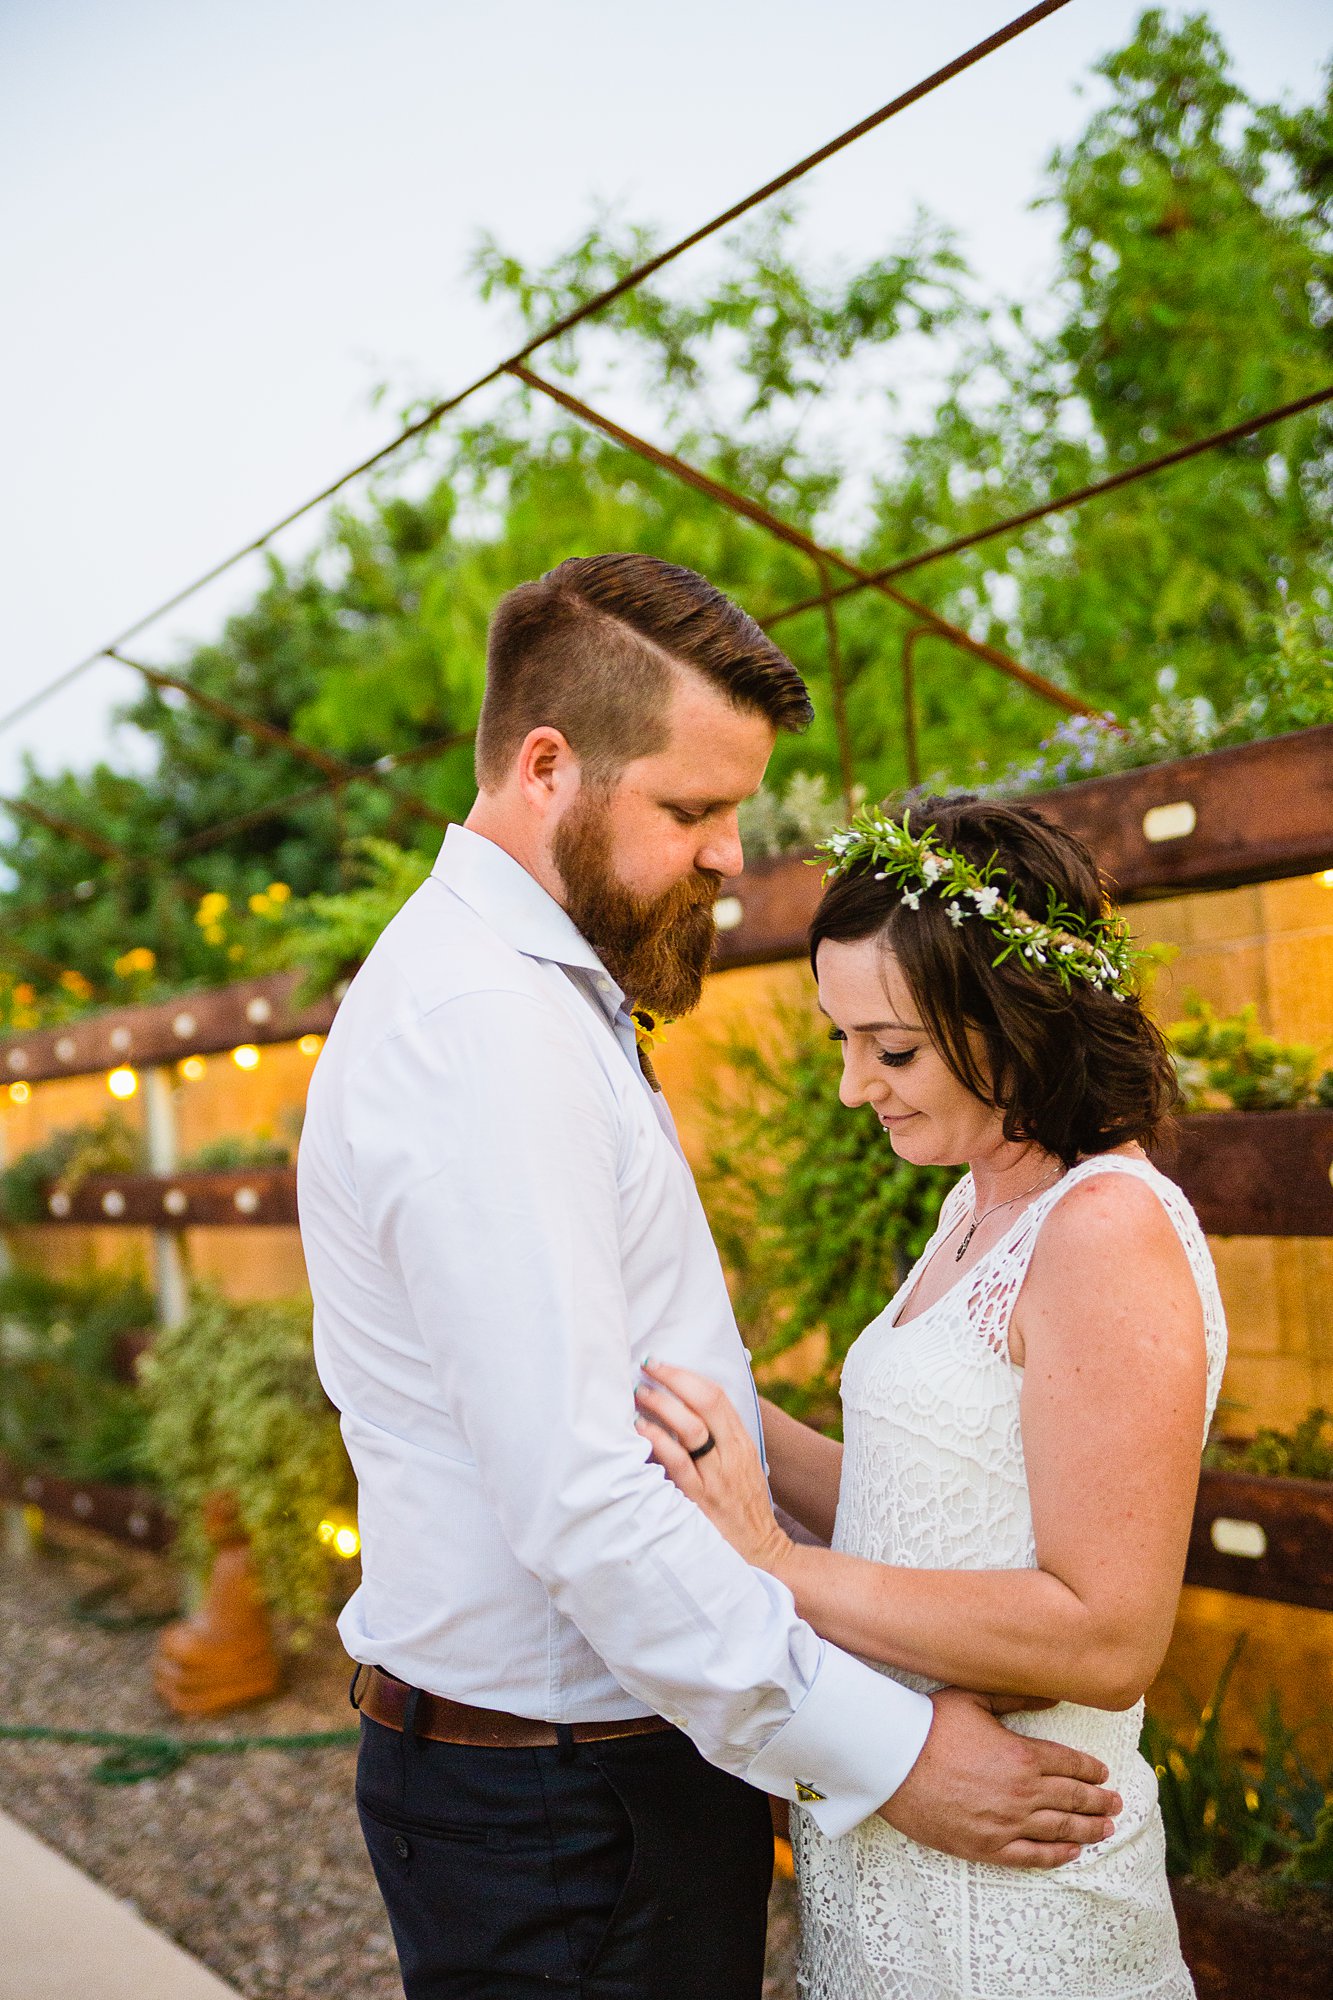 Simple boho inspired bride and groom at their intimate backyard garden wedding by Arizona wedding photographer PMA Photography.